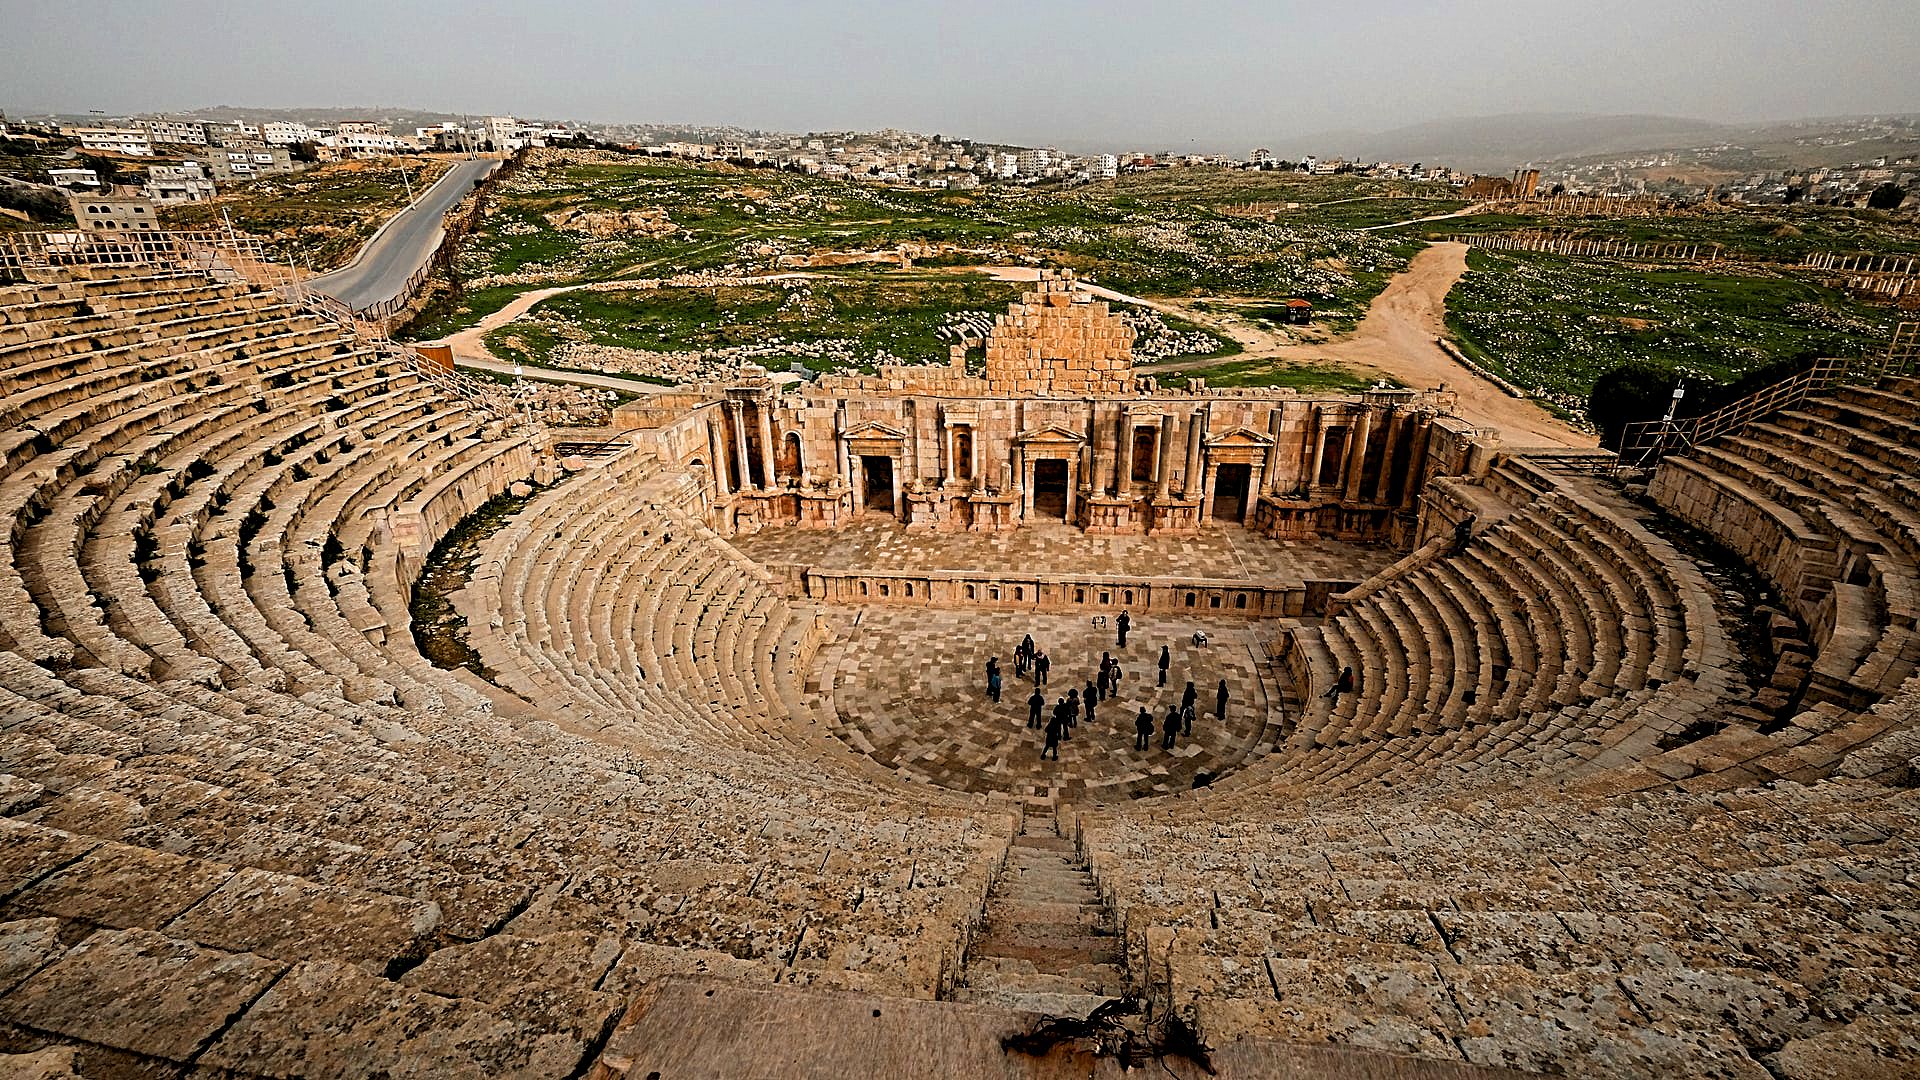 North Theater of Jerash, Jordan